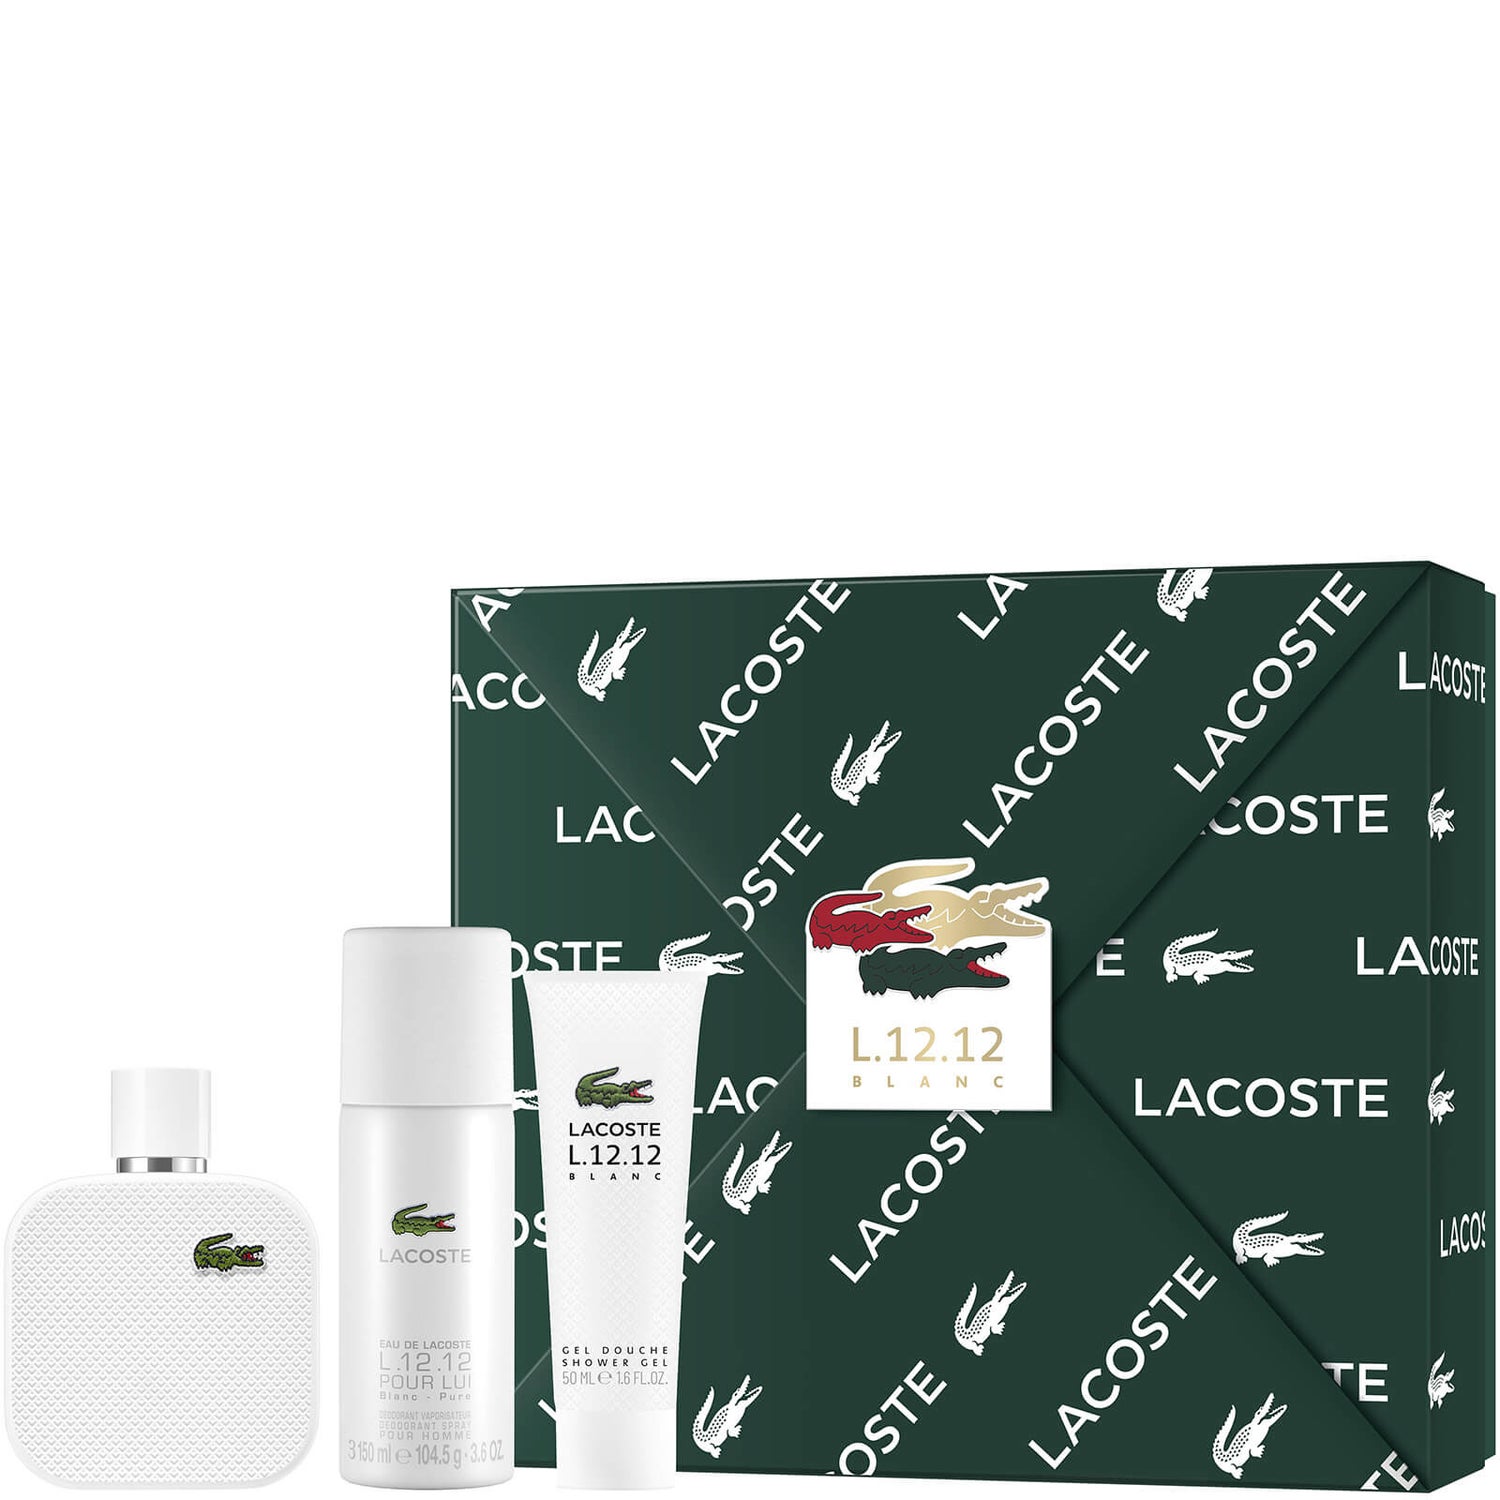 Lacoste L.12.12 Blanc 男士淡香水 100ml 禮盒套裝